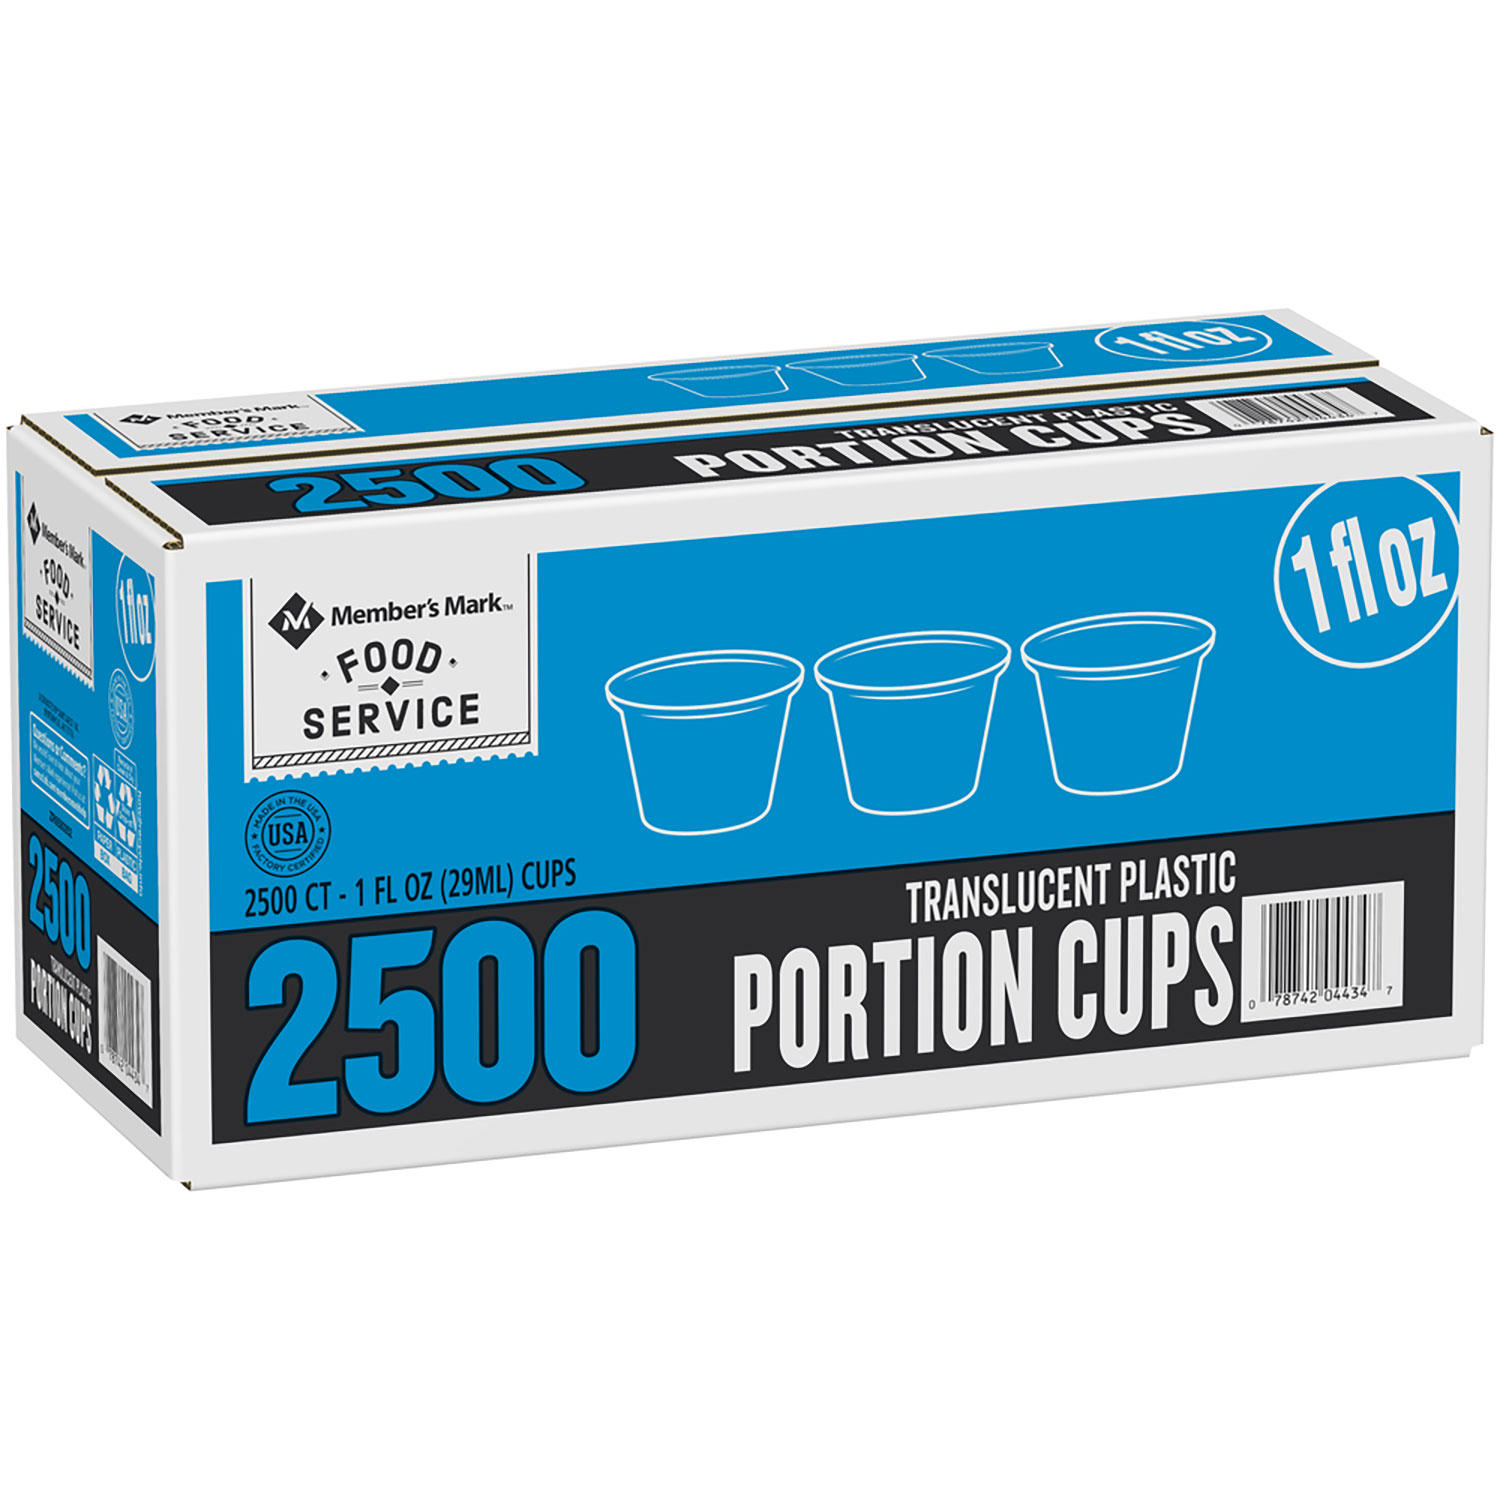 Member's Mark Translucent Plastic Portion Cups (1 fl. oz, 2,500 ct.)